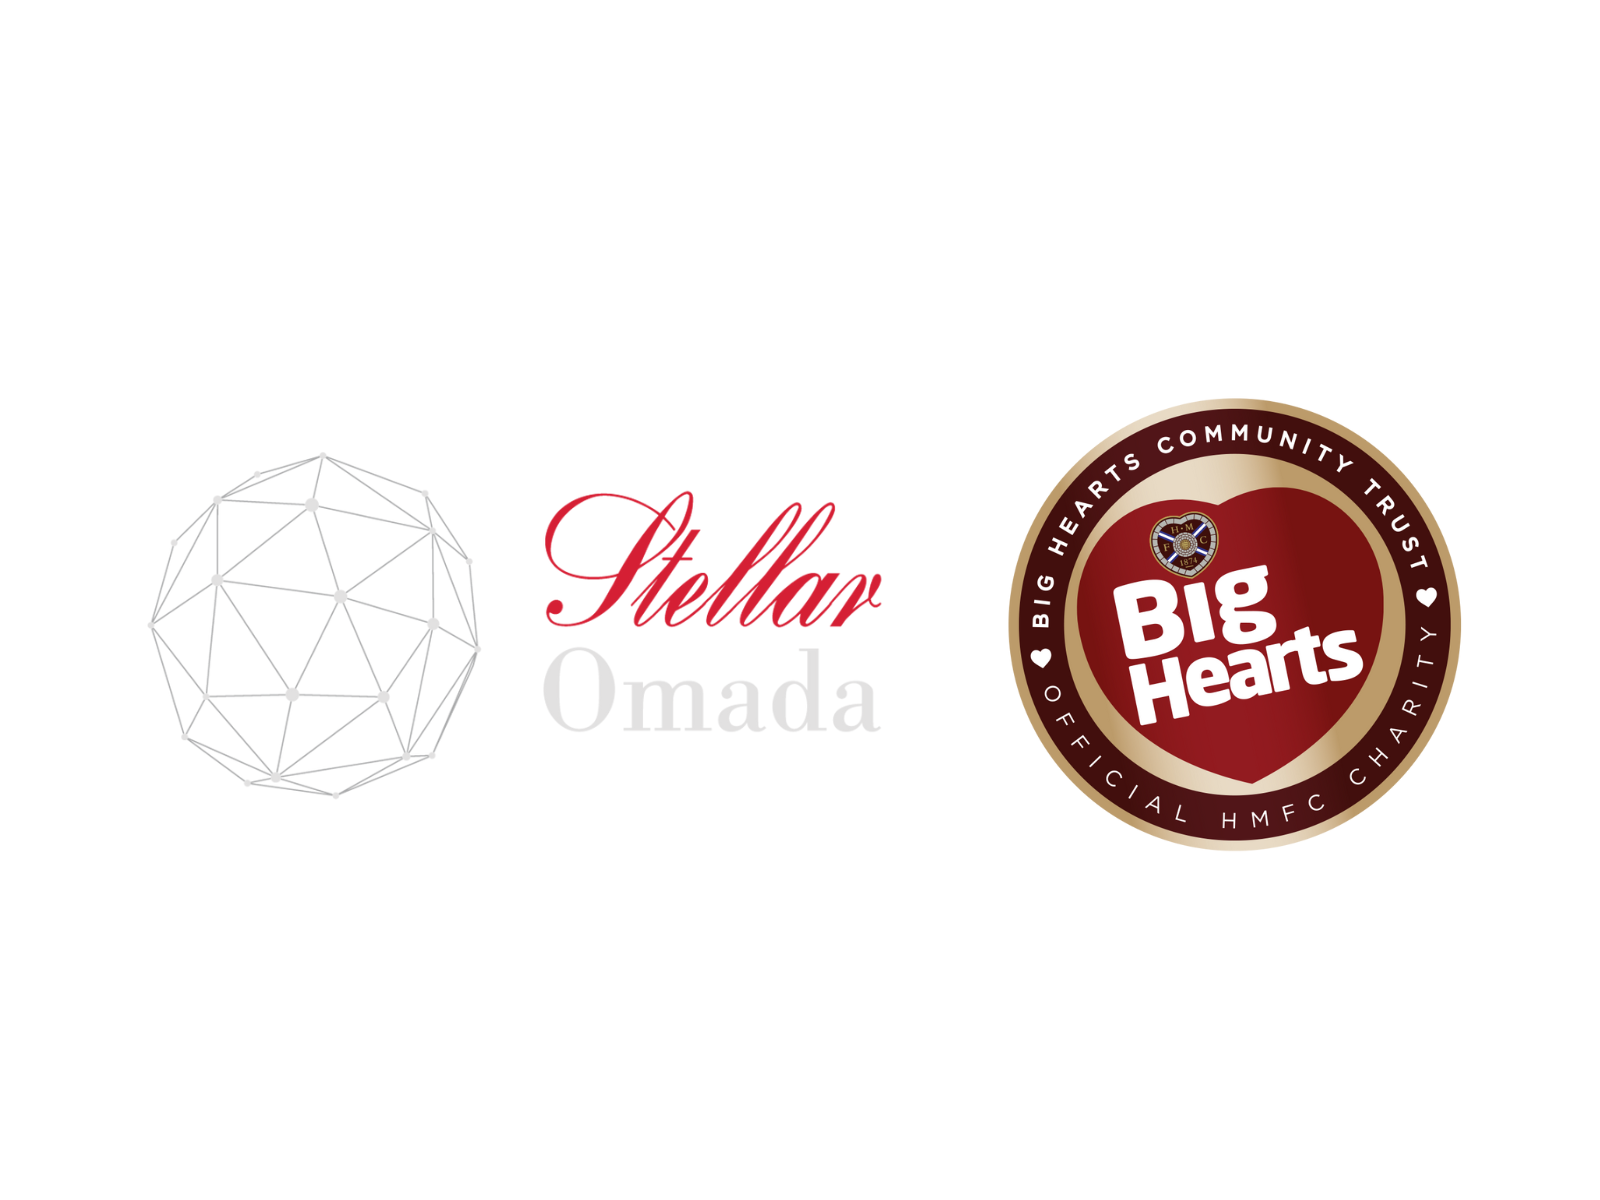  » Big Hearts – proud charity partner of Stellar Omada in 2023